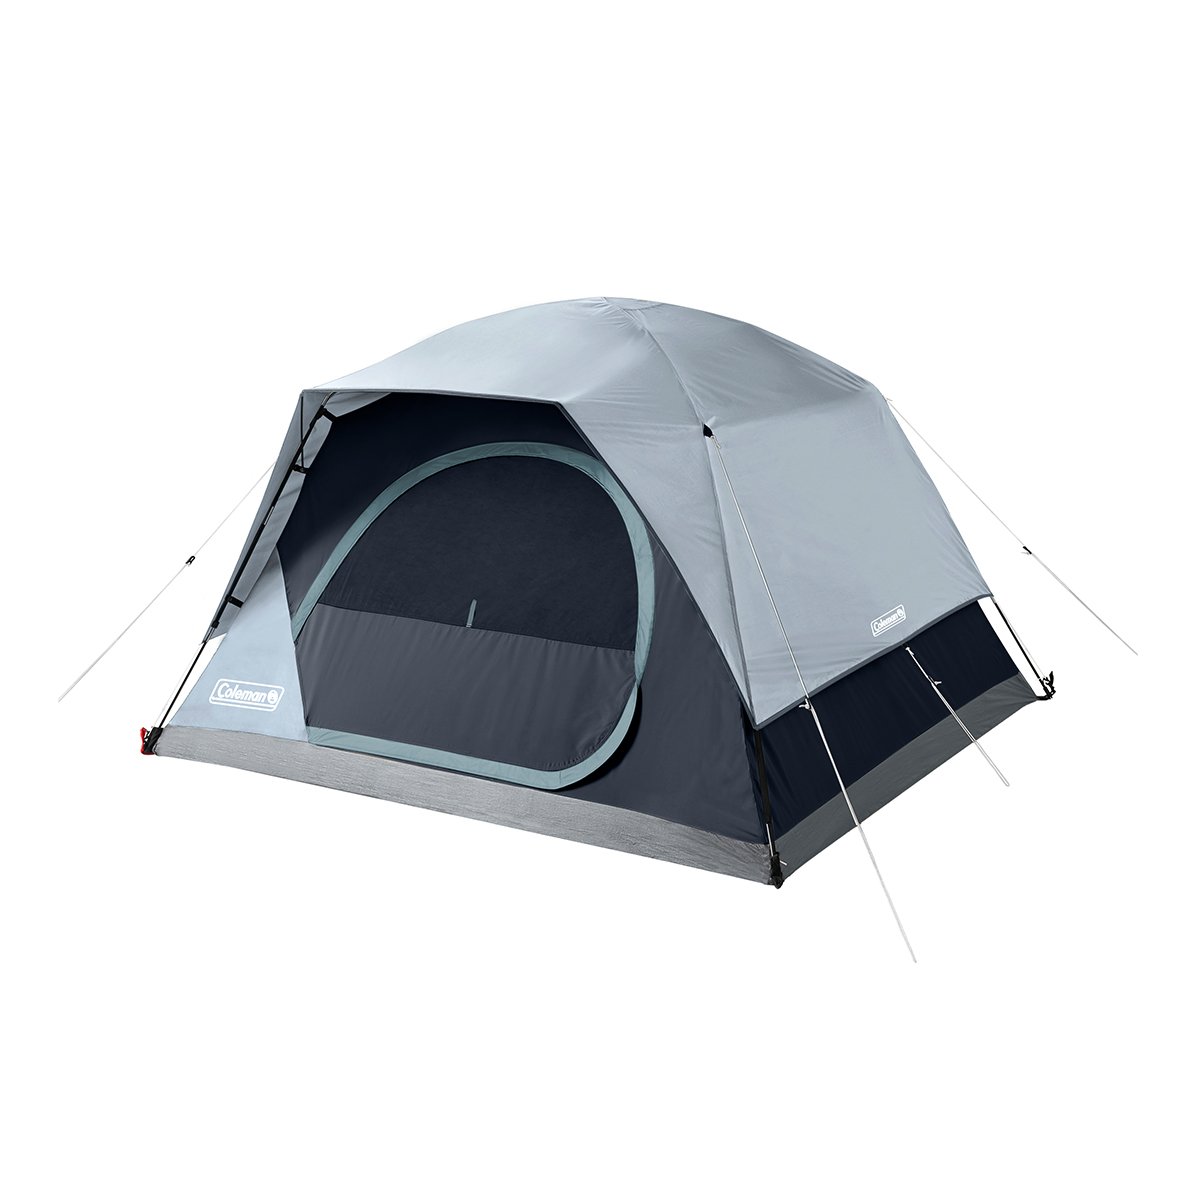 fluctueren struik Noodlottig Skydome™ 4-Person Camping Tent with LED Lighting | Coleman